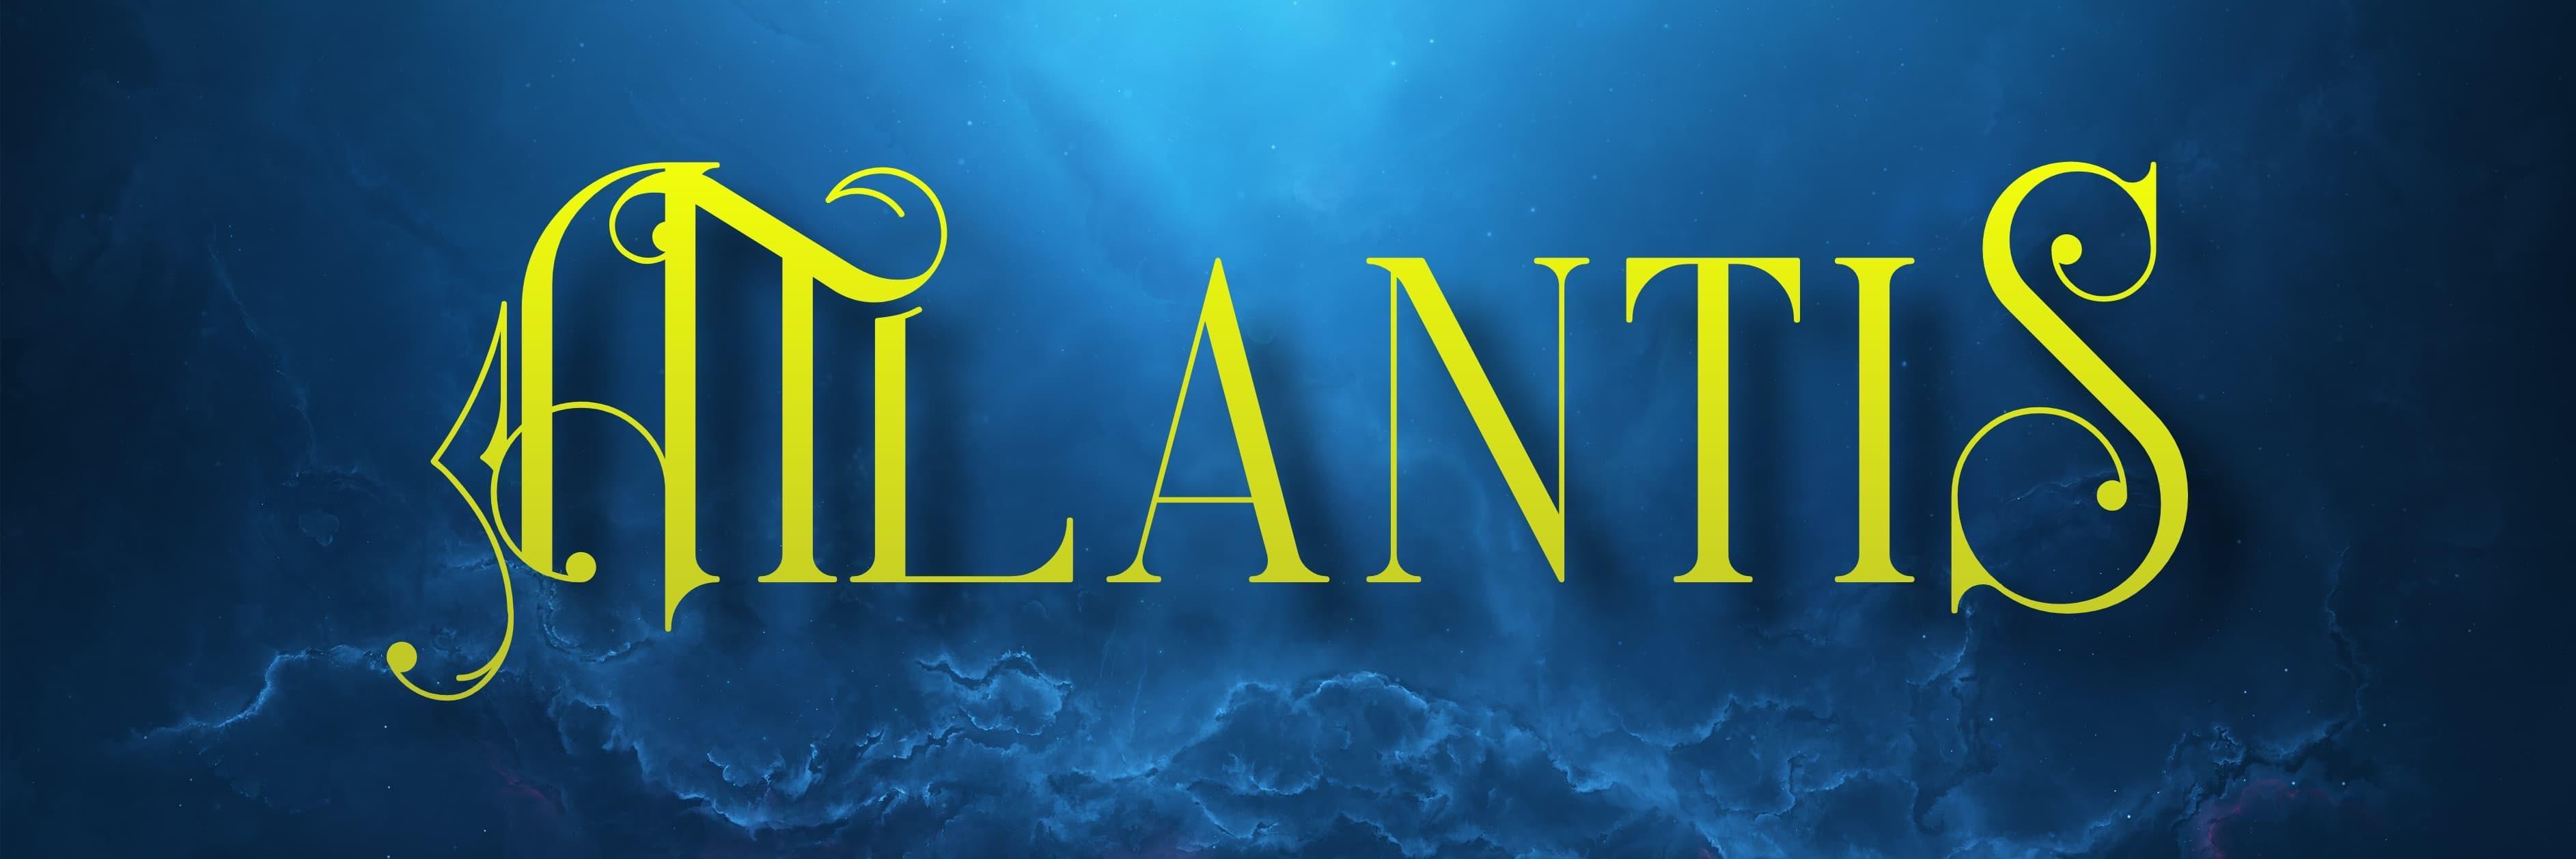 Atlantis Banner